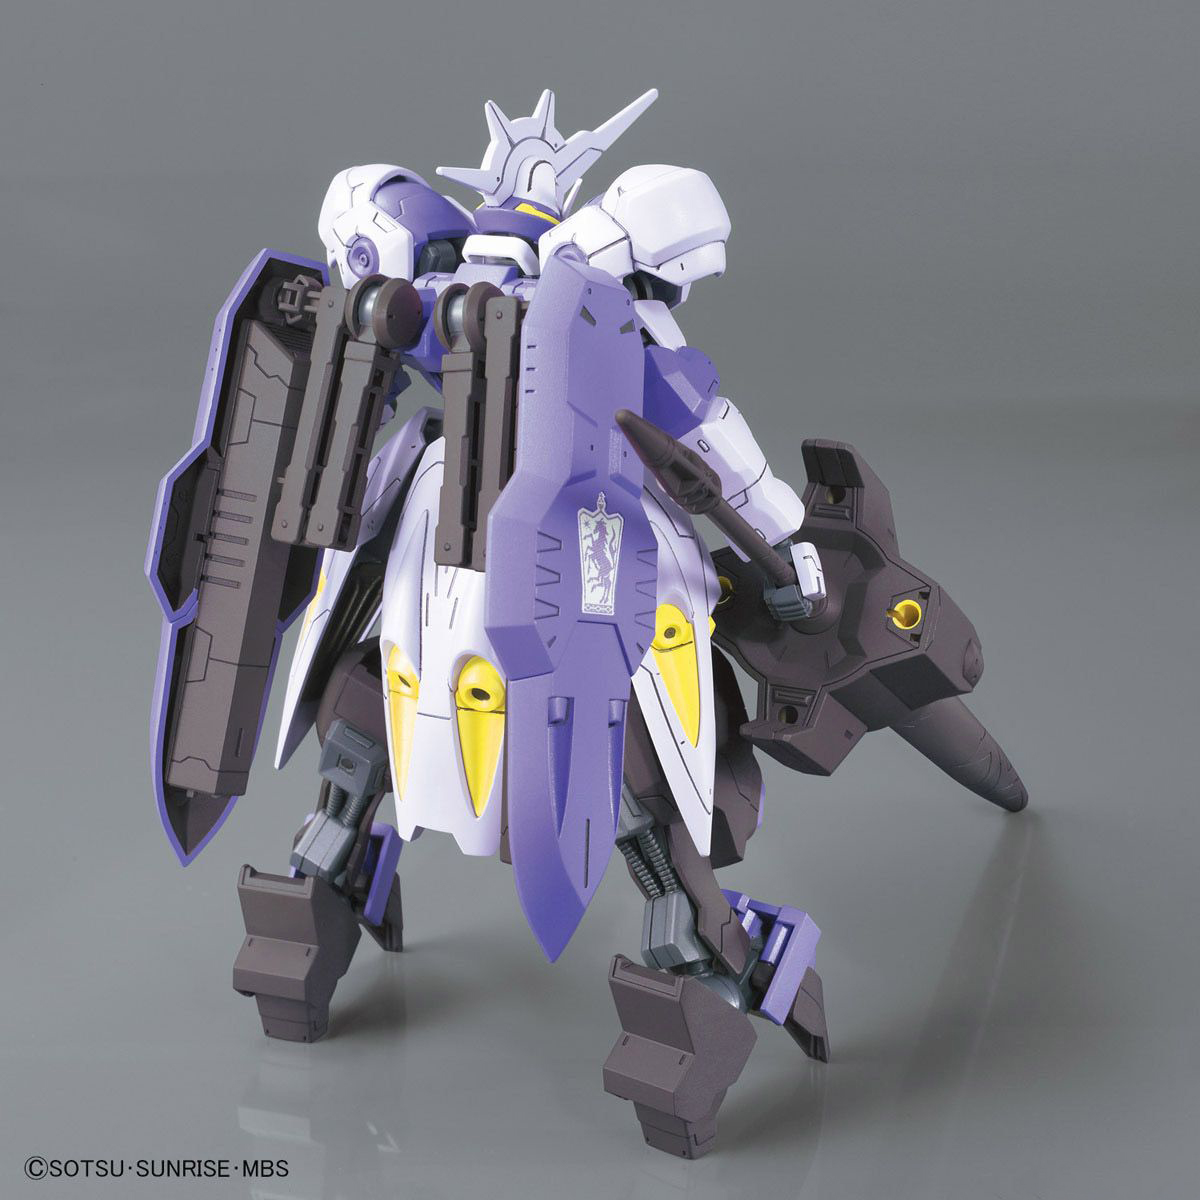 HG 1/144 Gundam Kimaris Vidar - Release Info, Box art and Official Images